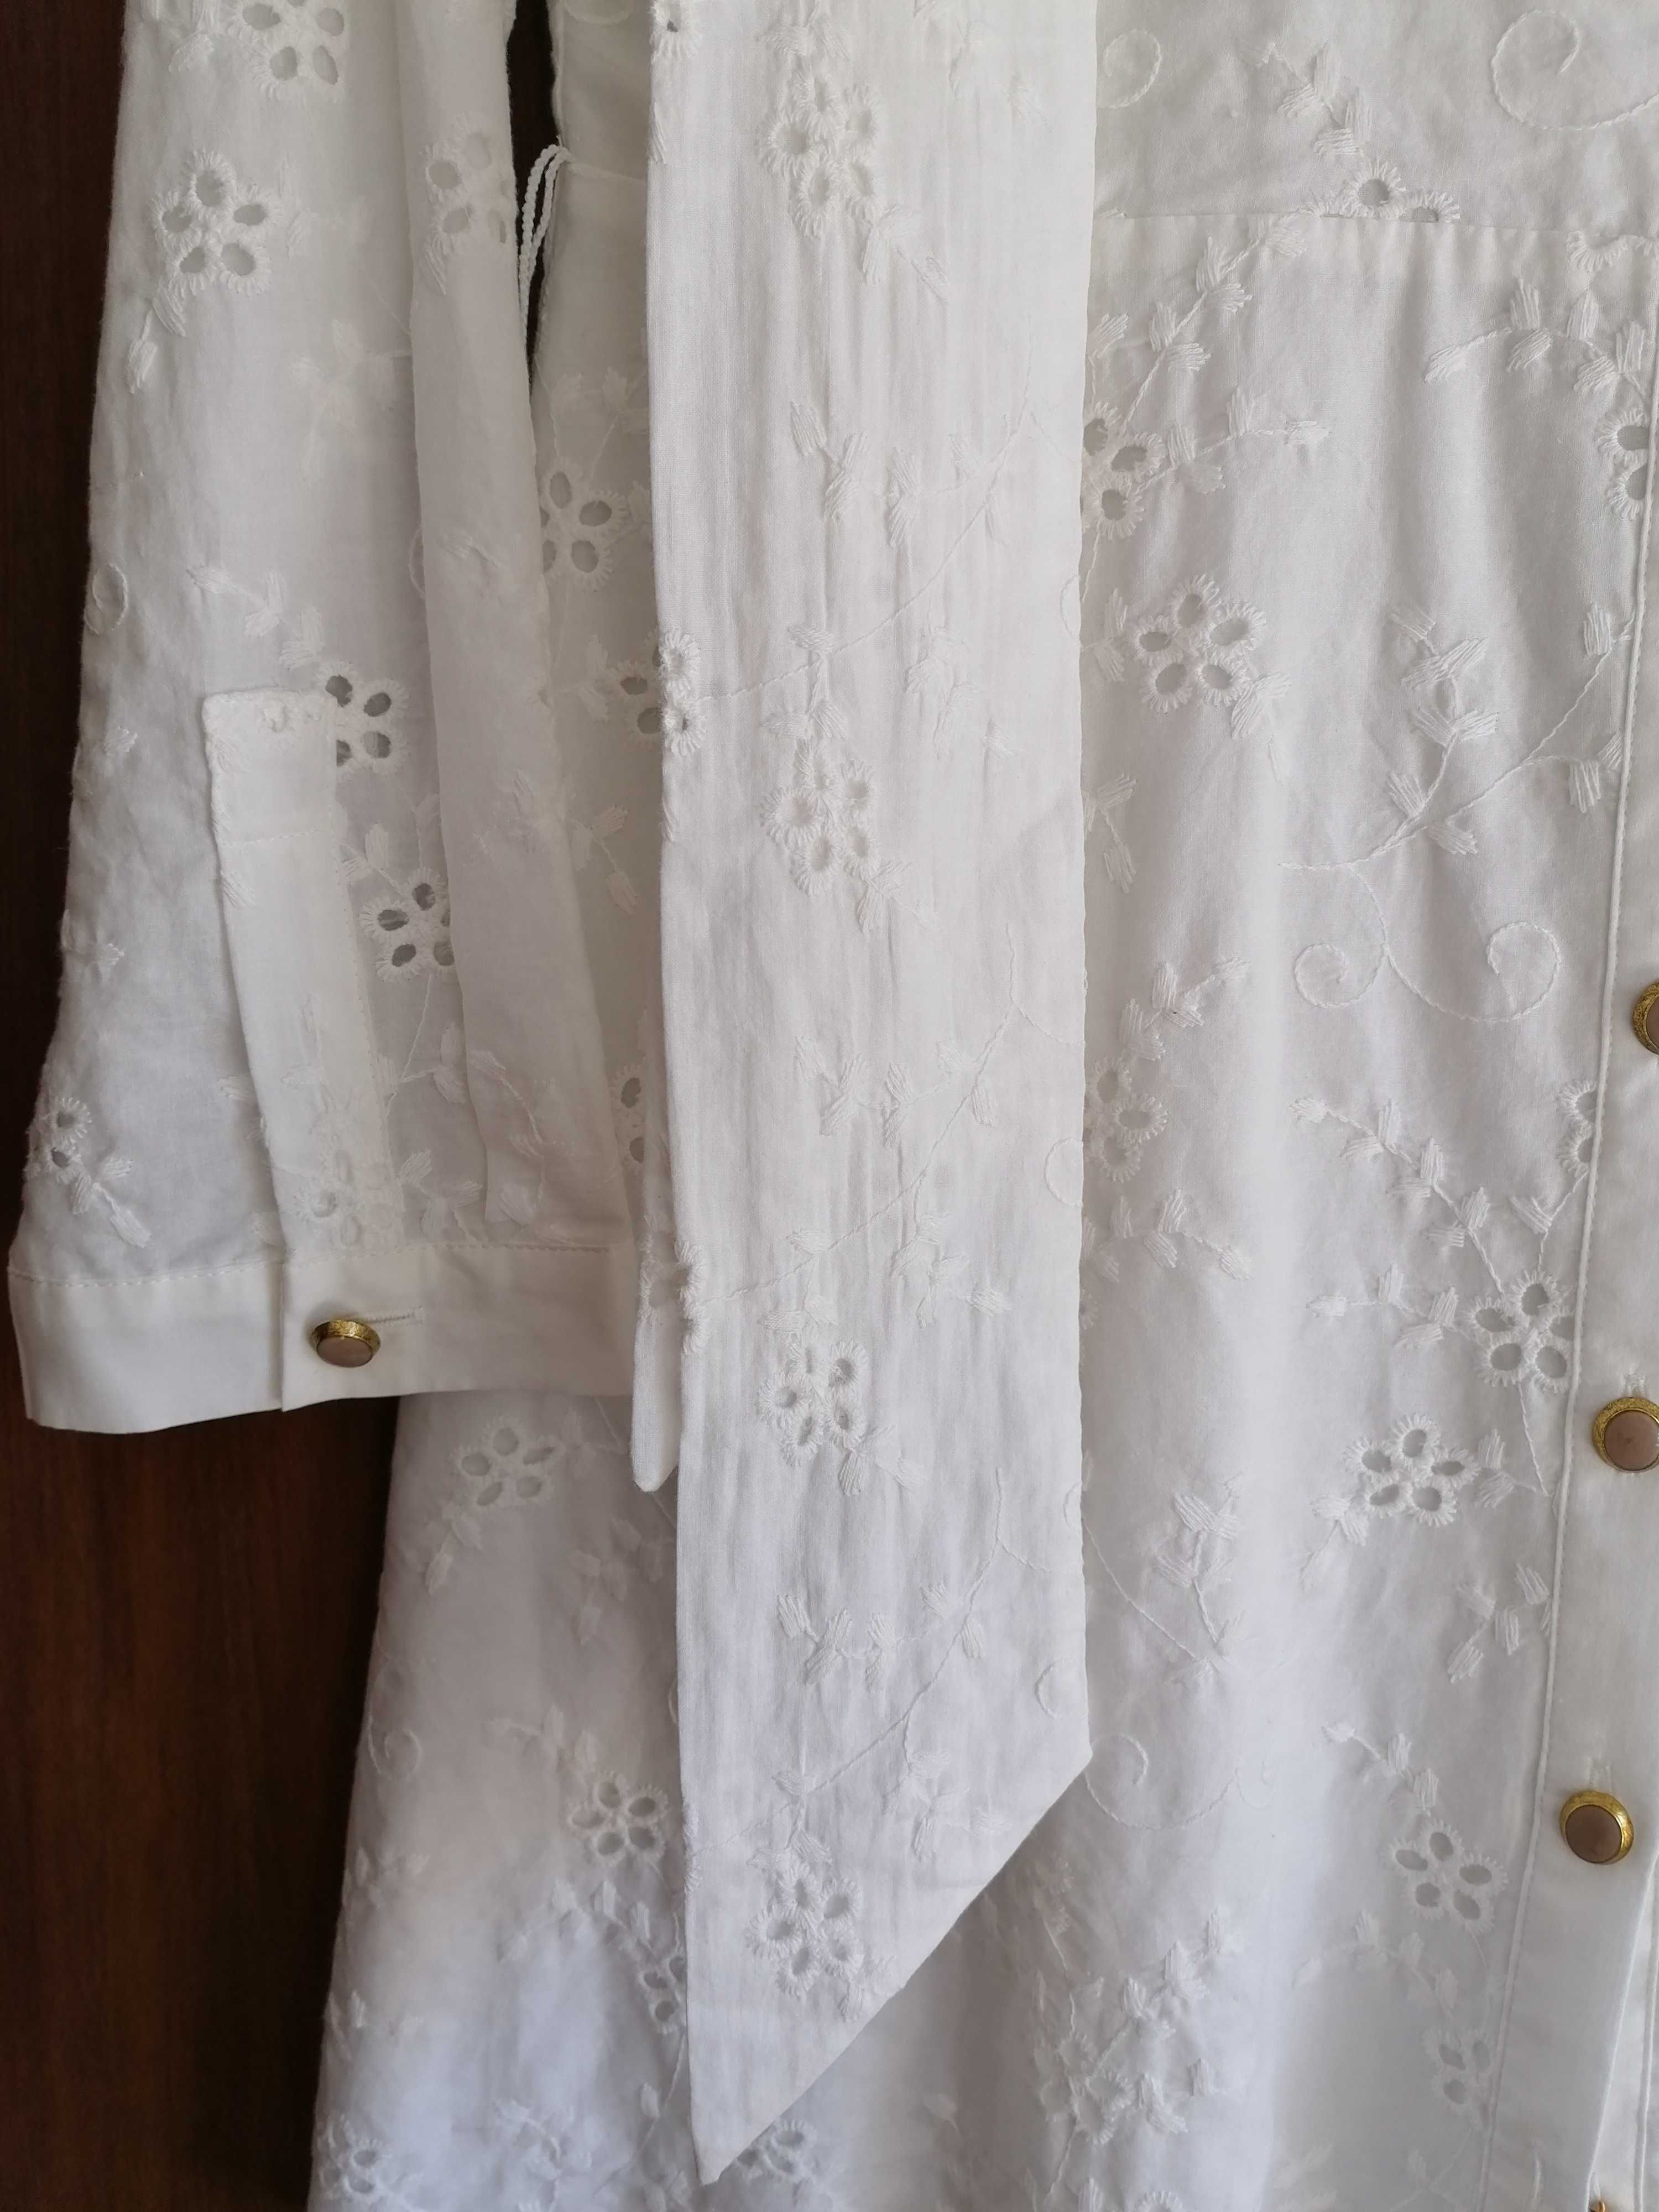 Vestido branco Zara bordado